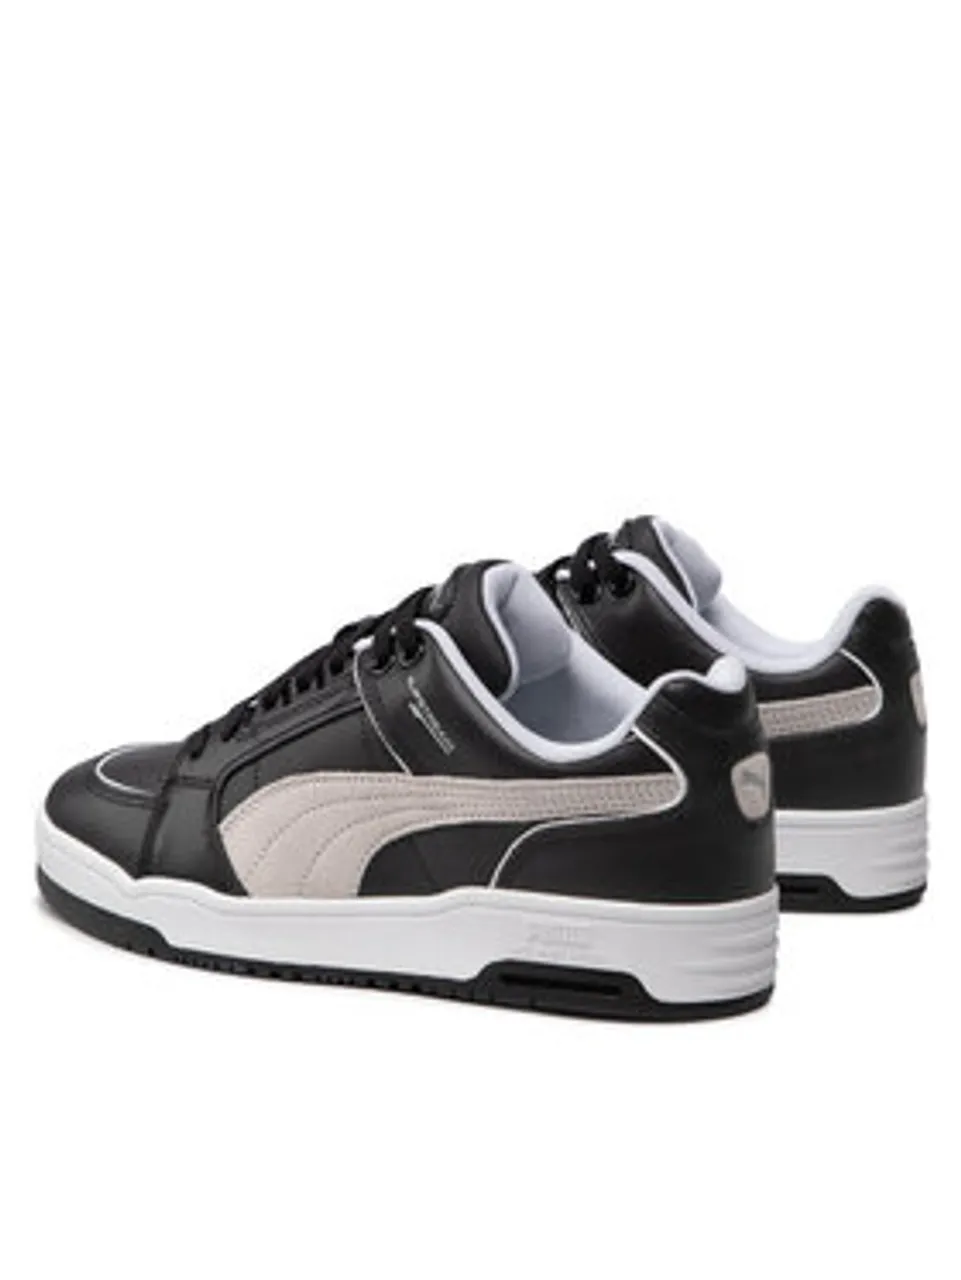 Puma Sneakers Slipstream Retro Sum 386528 03 Schwarz